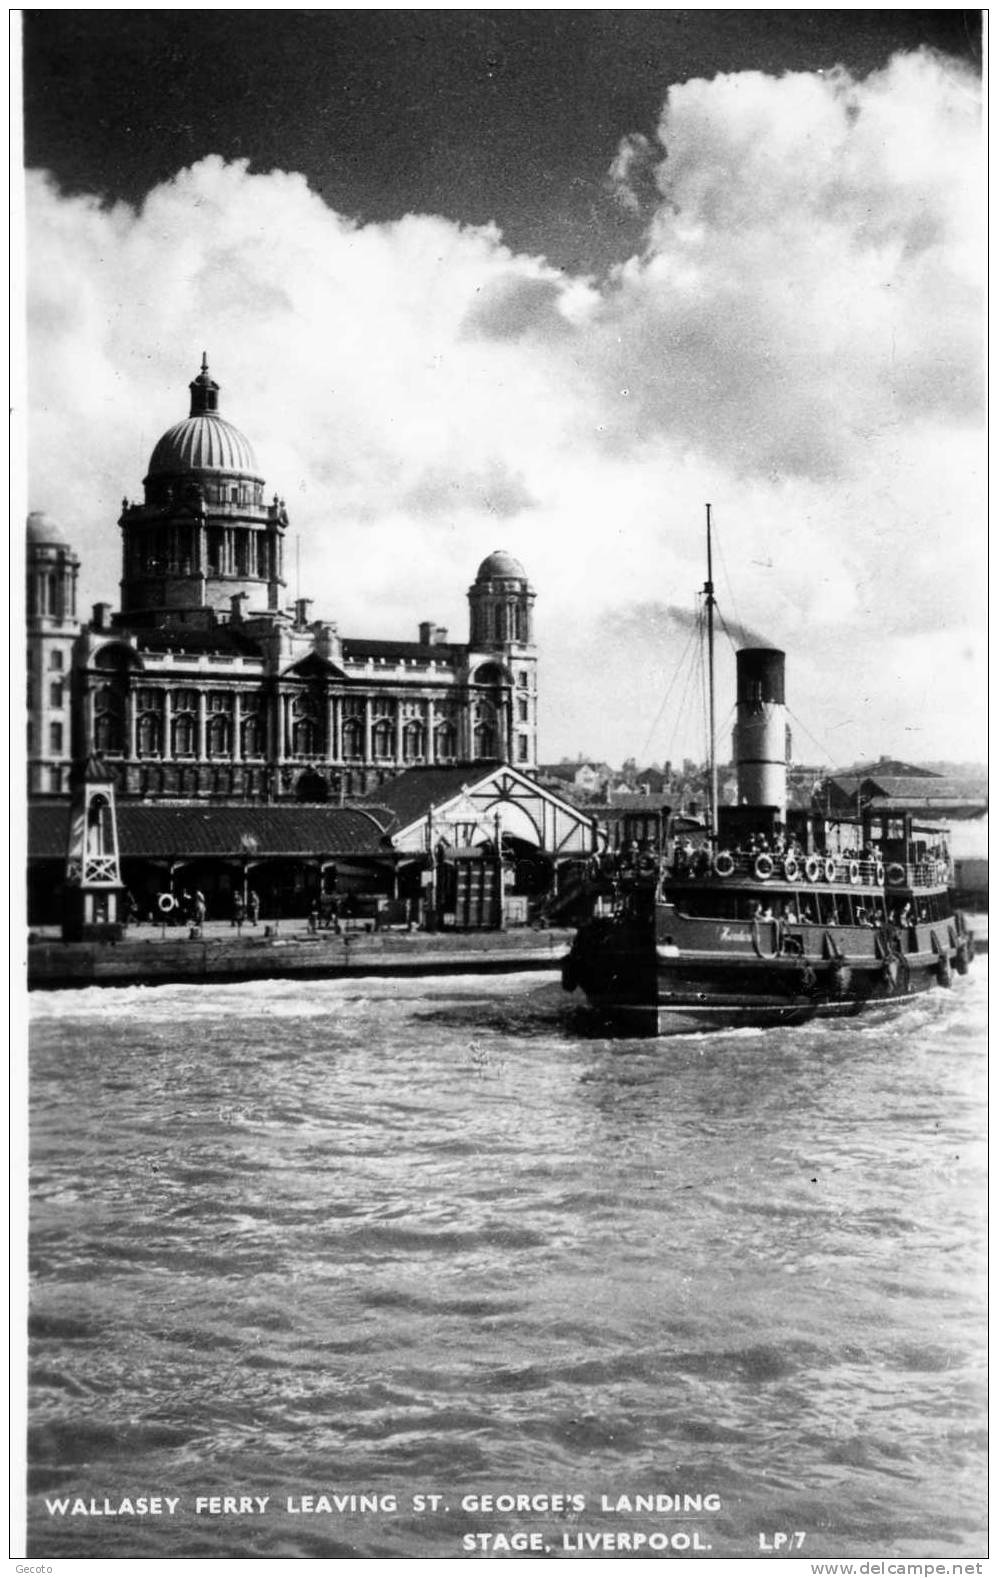 Wallaseyferry Leaving St George's Landing - Liverpool